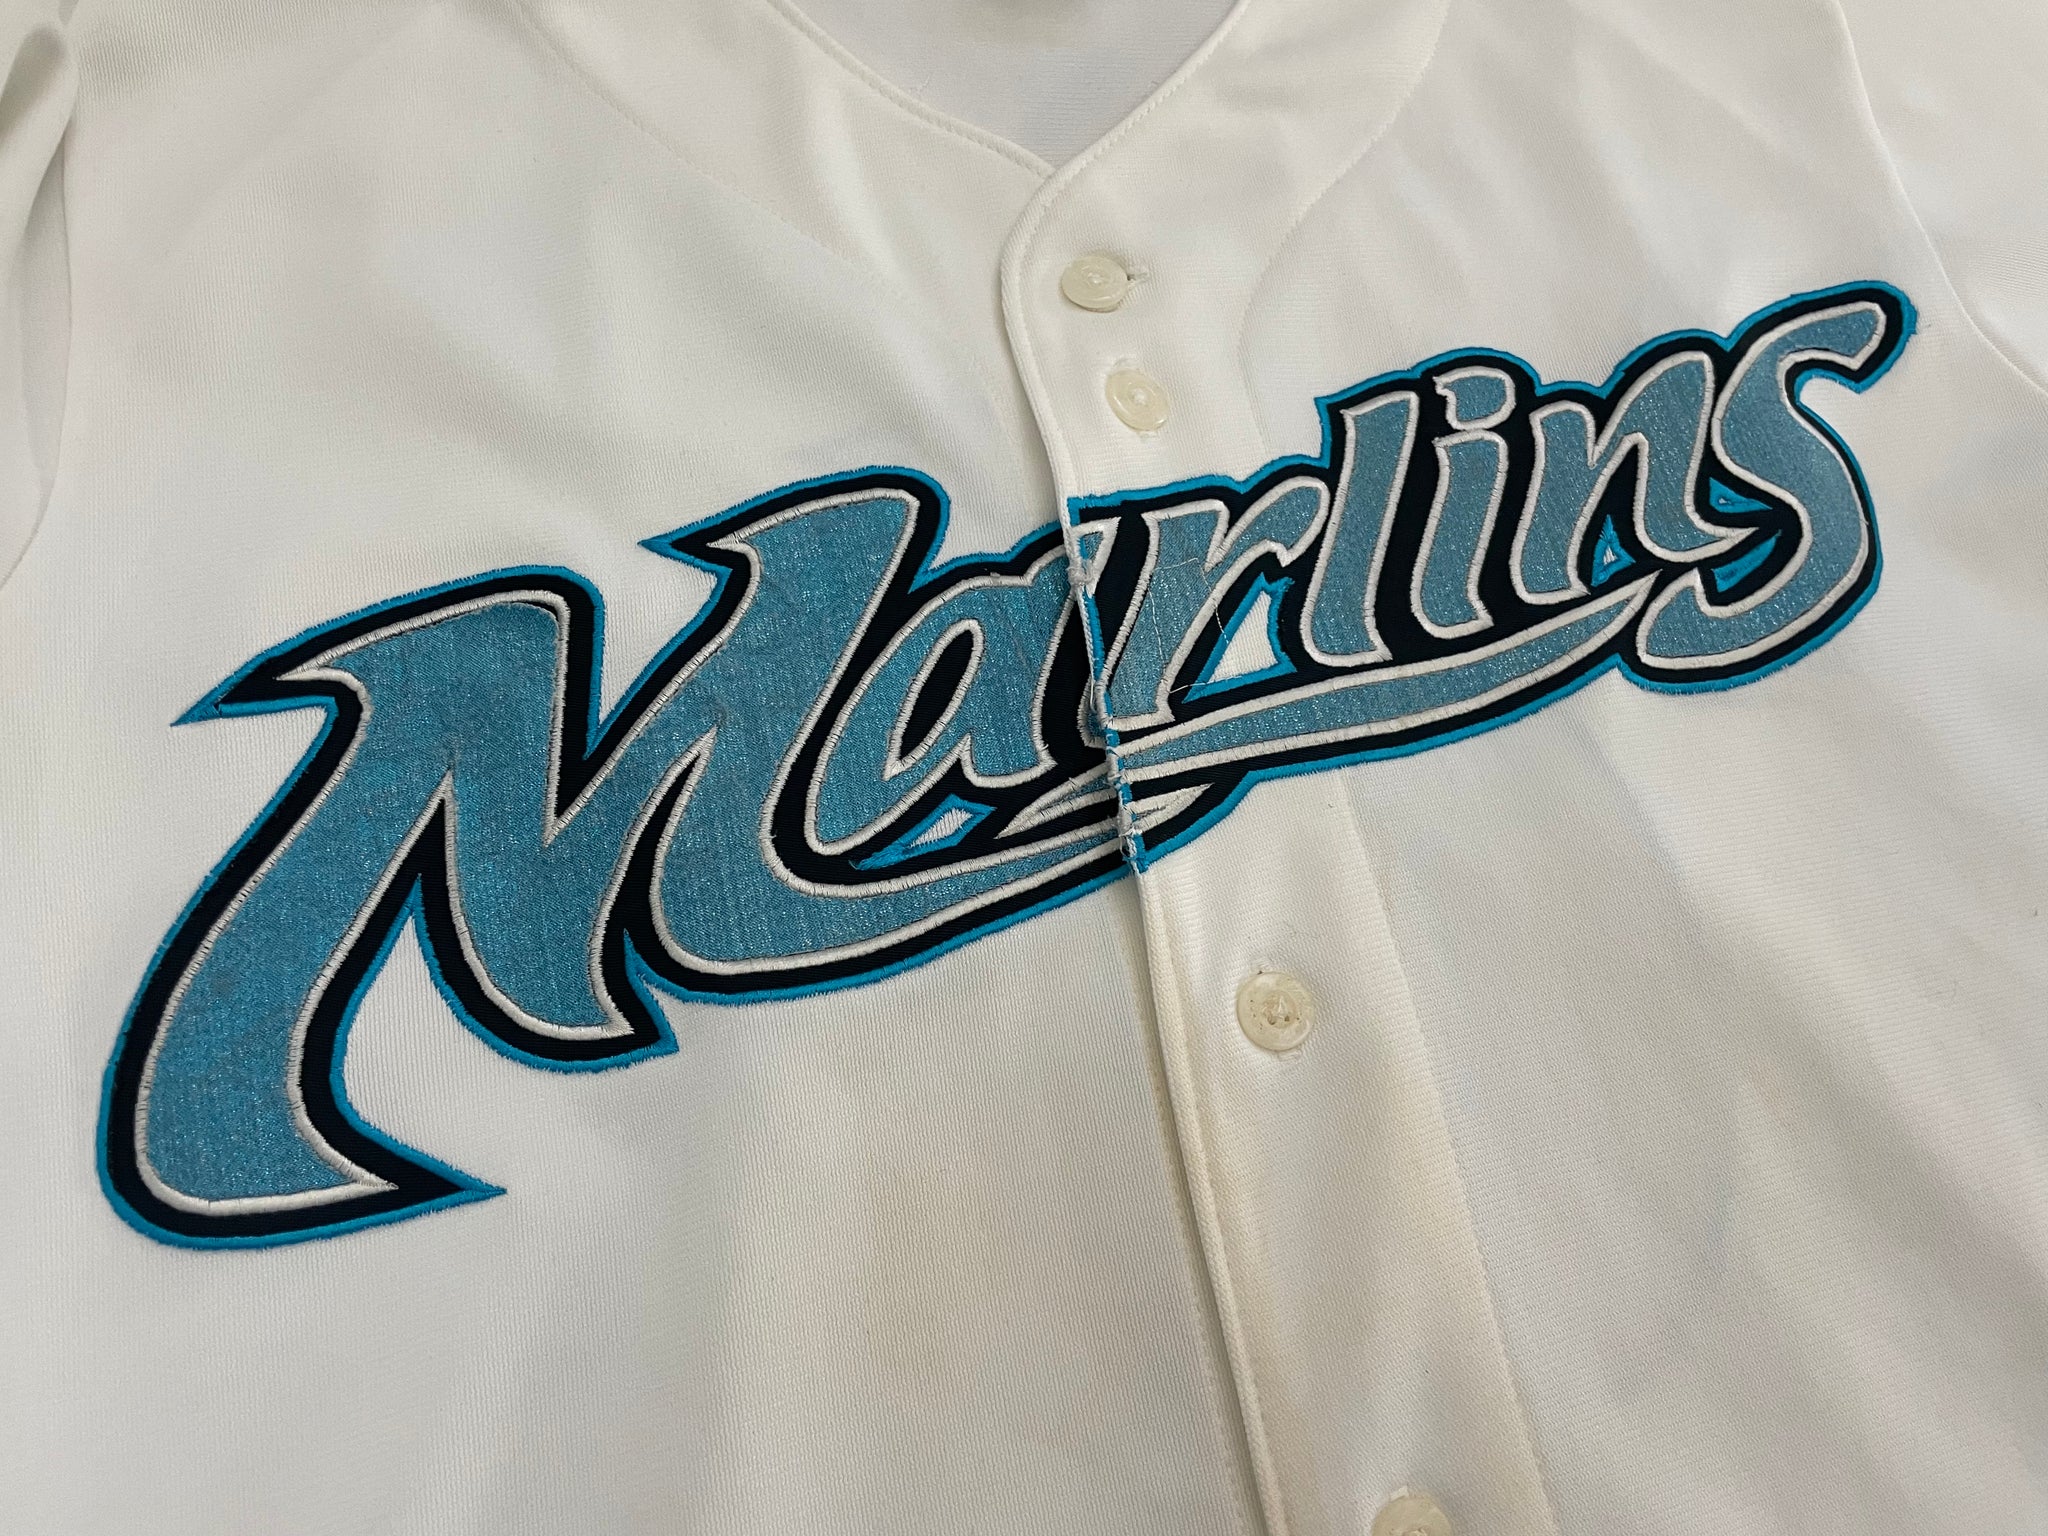 Morehead City Marlins Rawlings Game Worn Baseball Jersey, Size